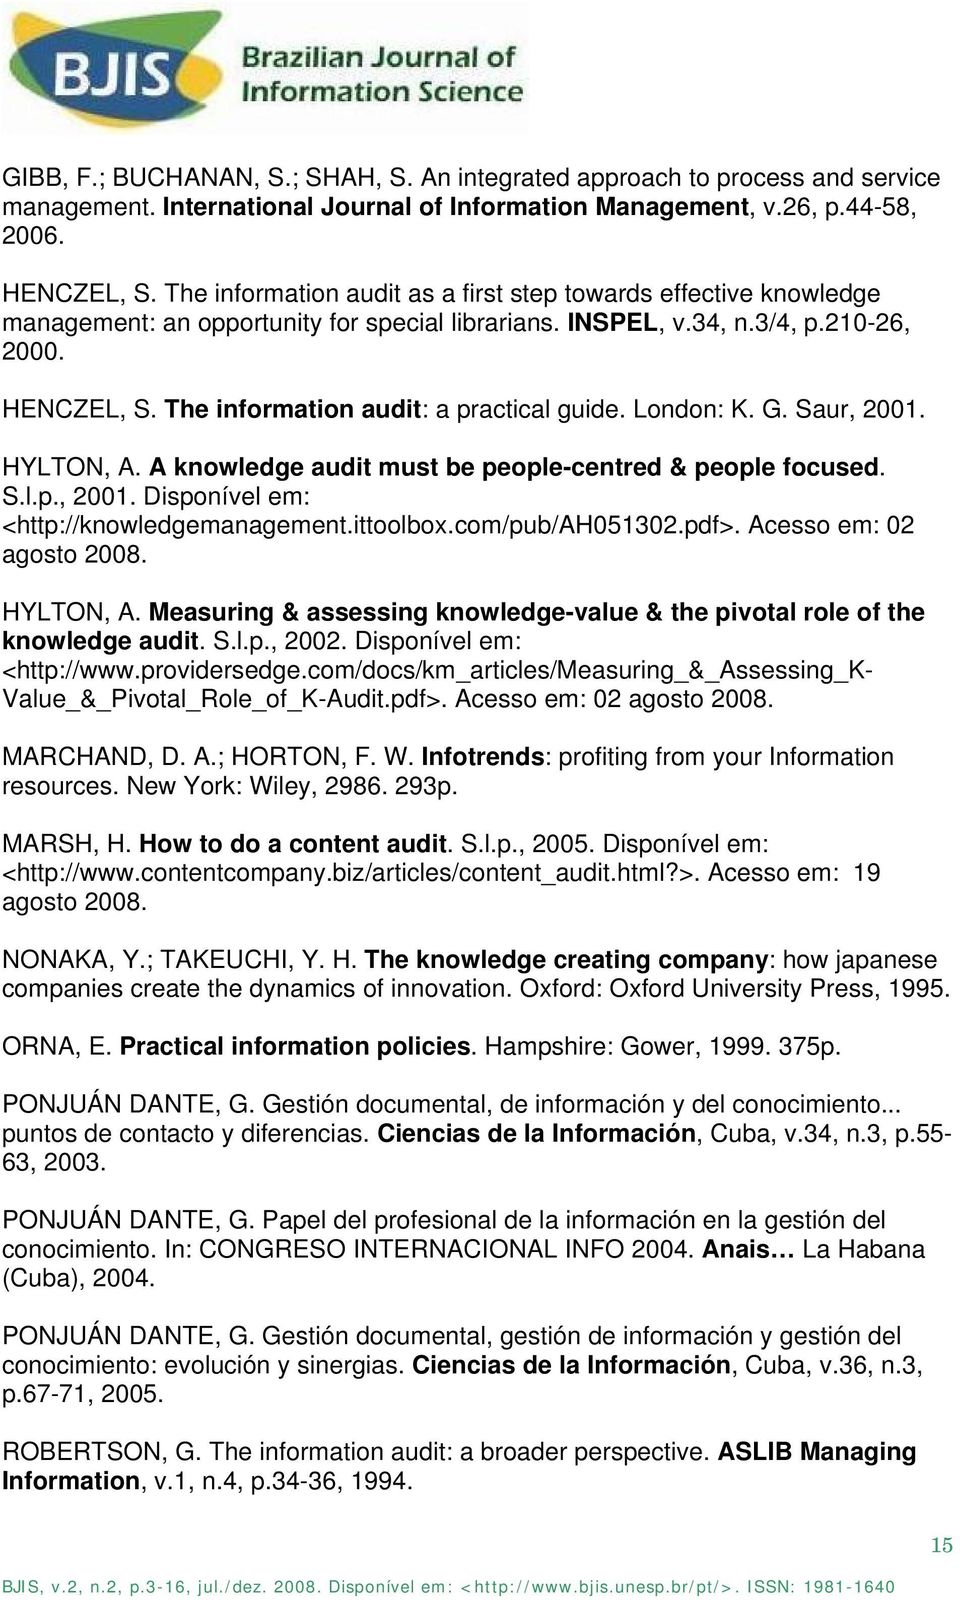 The information audit: a practical guide. London: K. G. Saur, 2001. HYLTON, A. A knowledge audit must be people-centred & people focused. S.l.p., 2001. Disponível em: <http://knowledgemanagement.